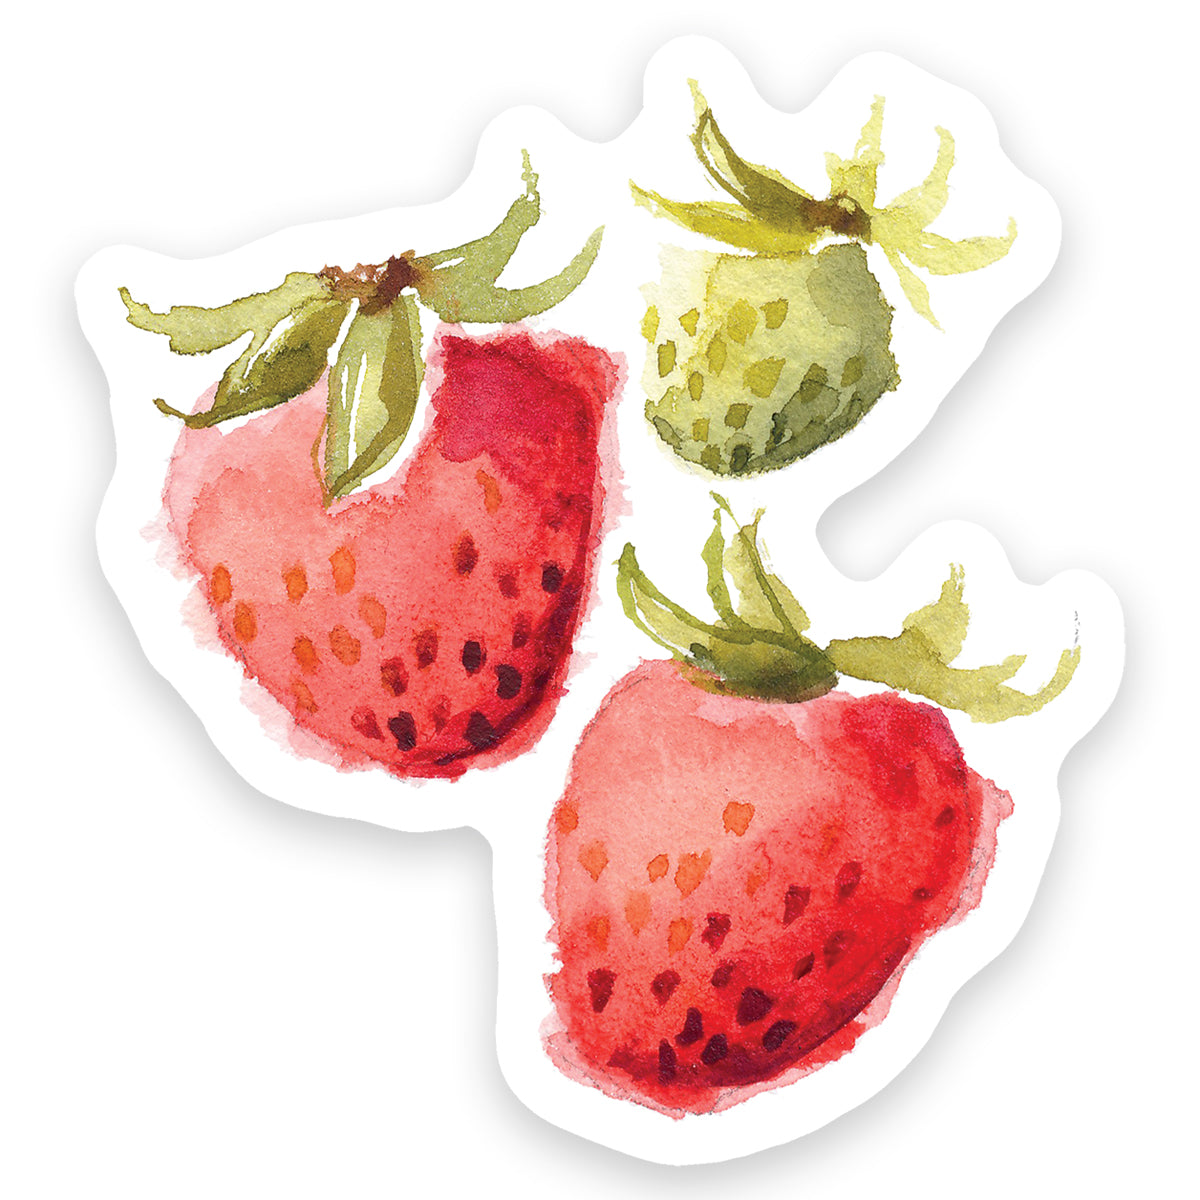 sweet strawberries gift set